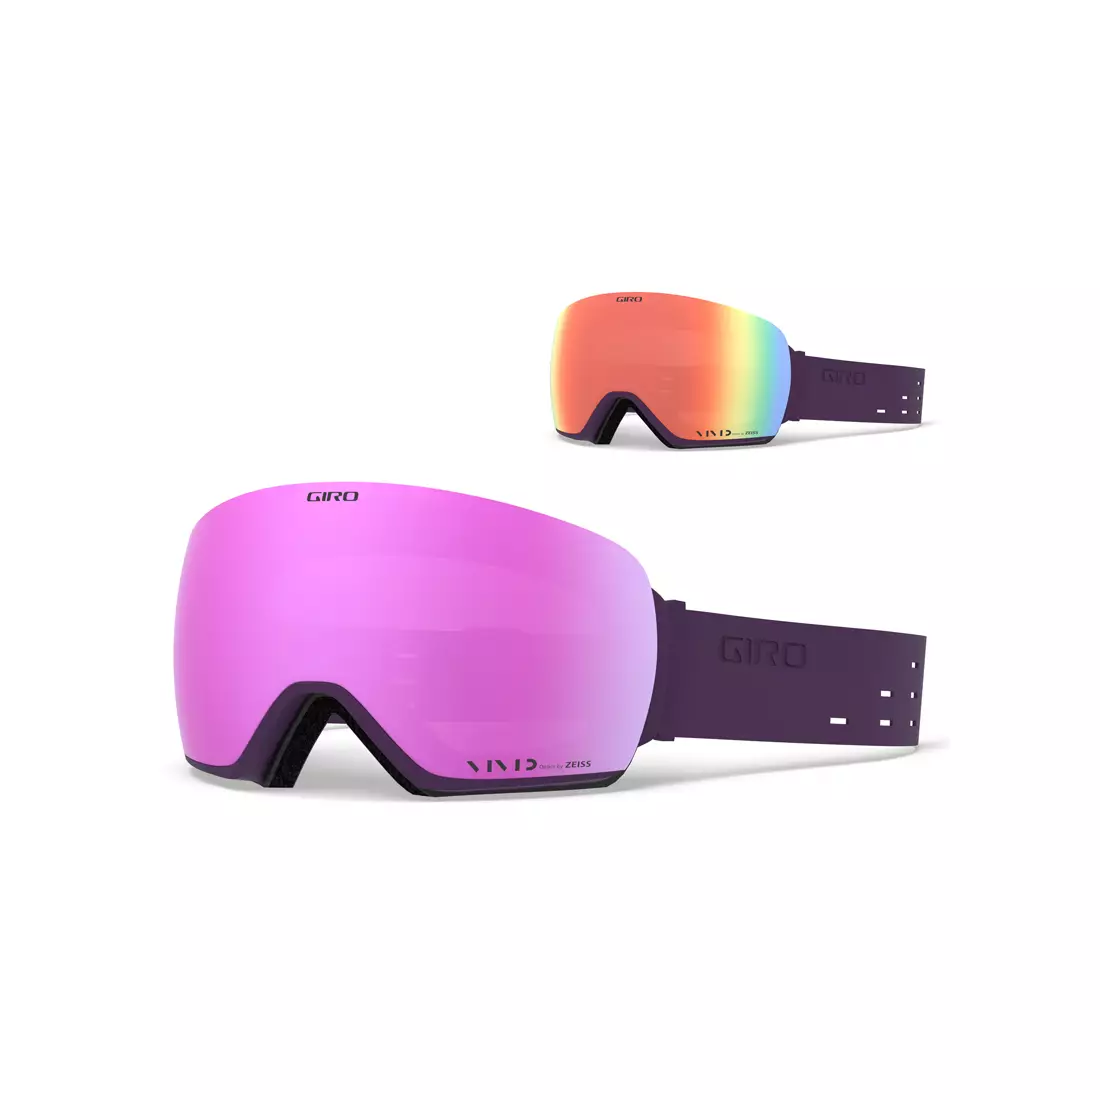 Lyžařské / snowboardové brýle GIRO LUSI SILICONE DUSTY PURPLE GR-7094603